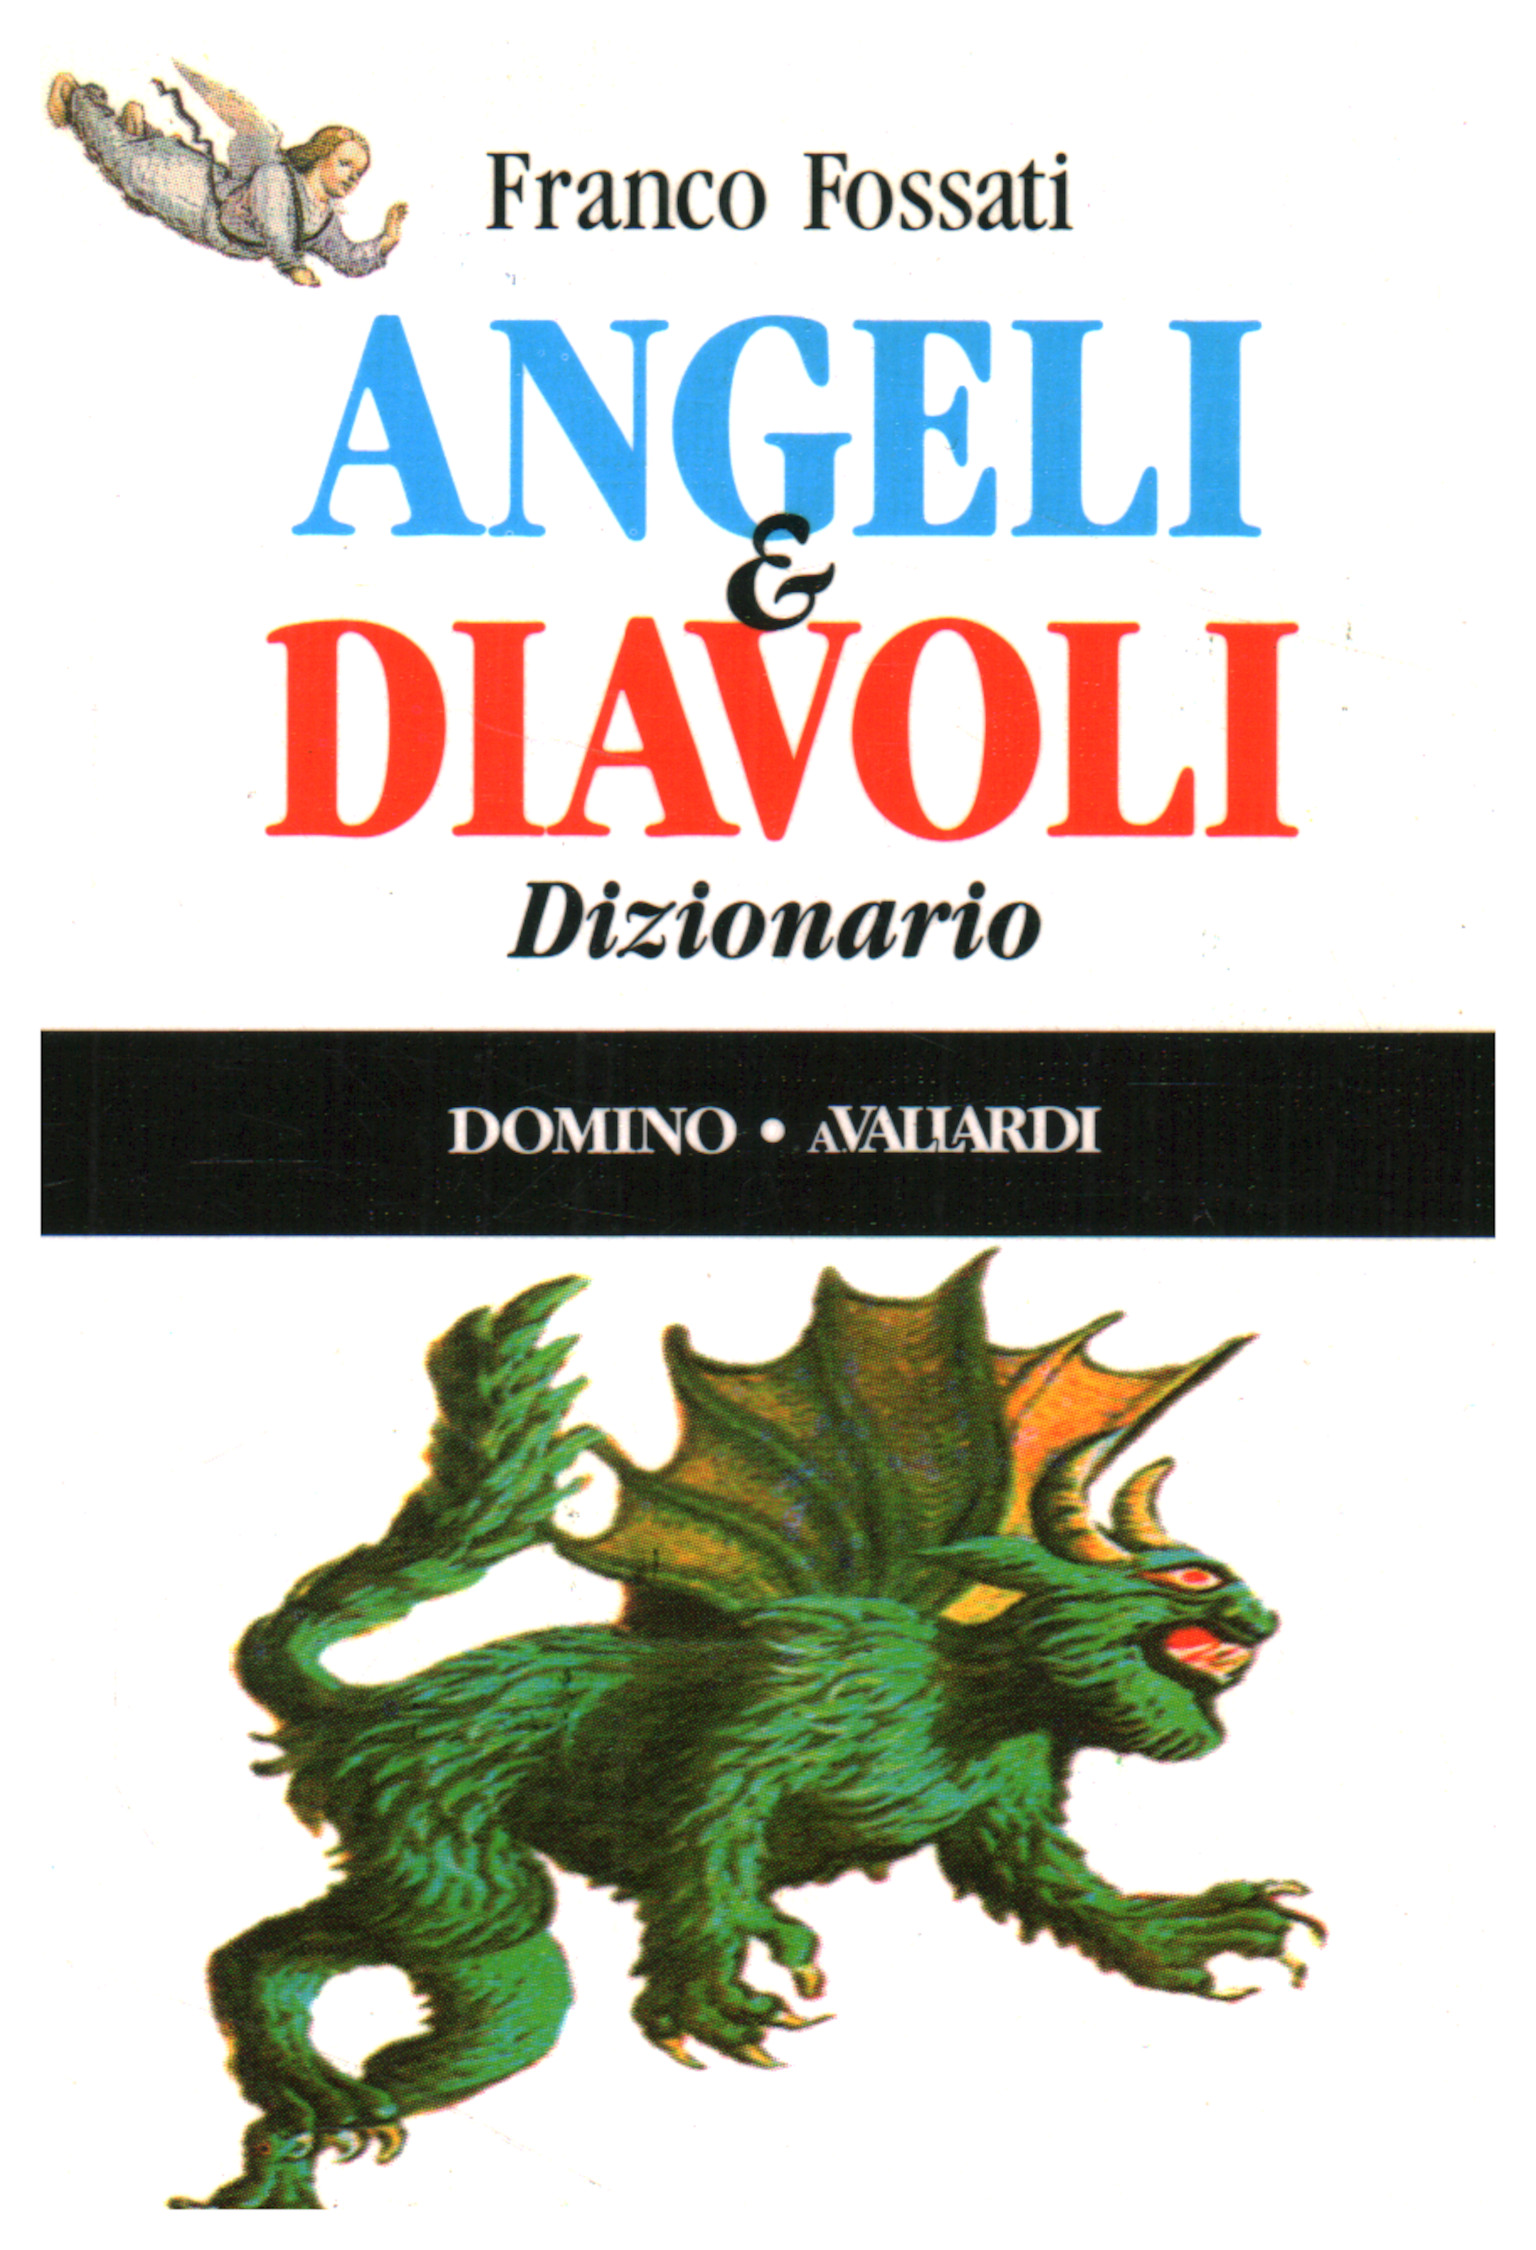 Angels & devils. Dictionary